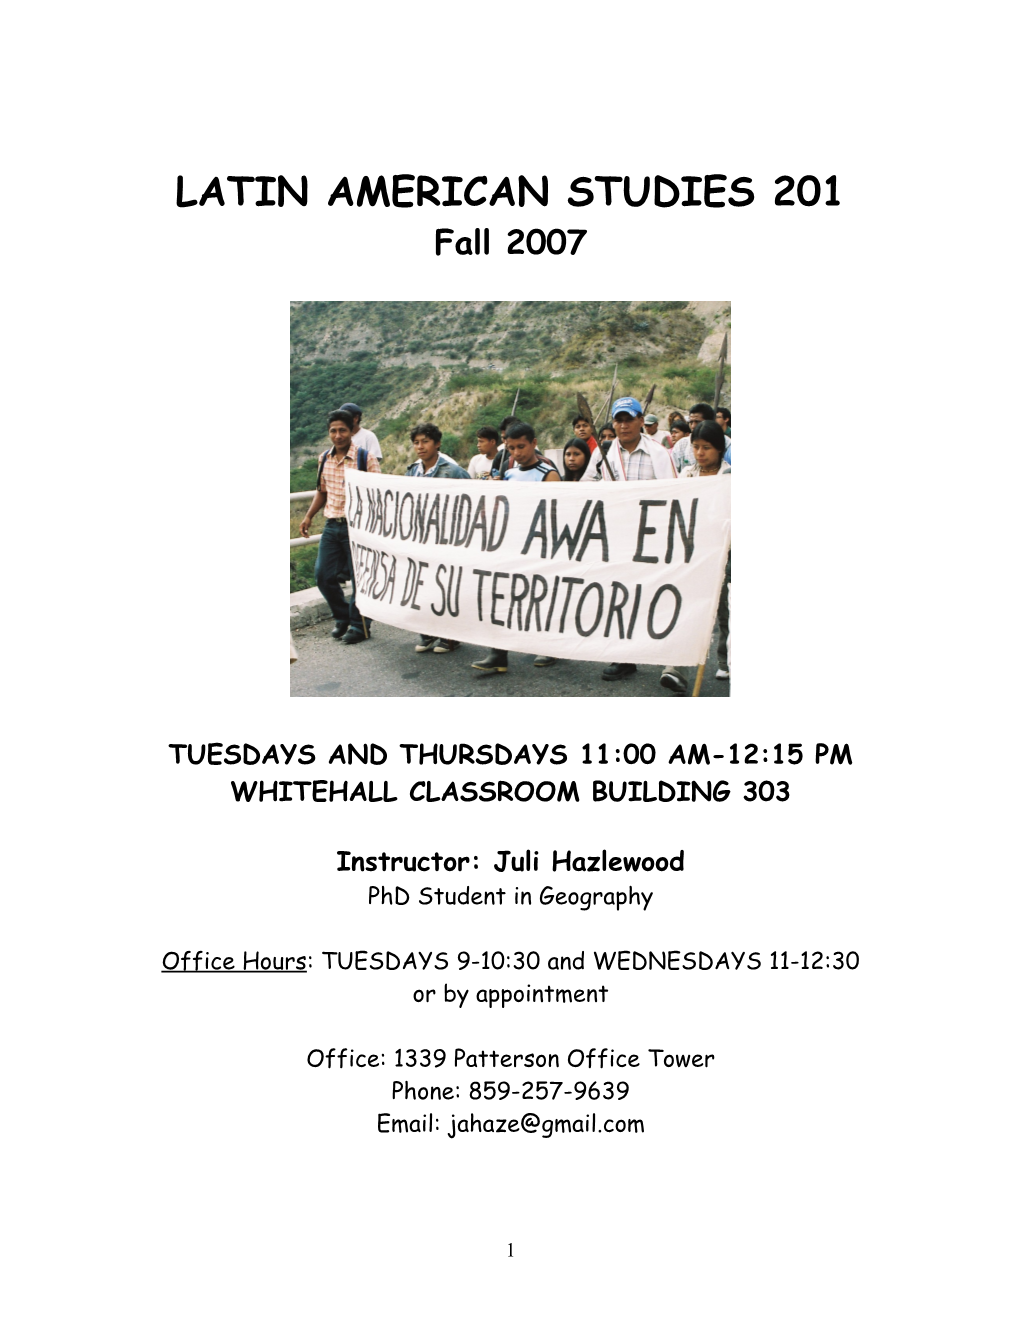 Latin American Studies